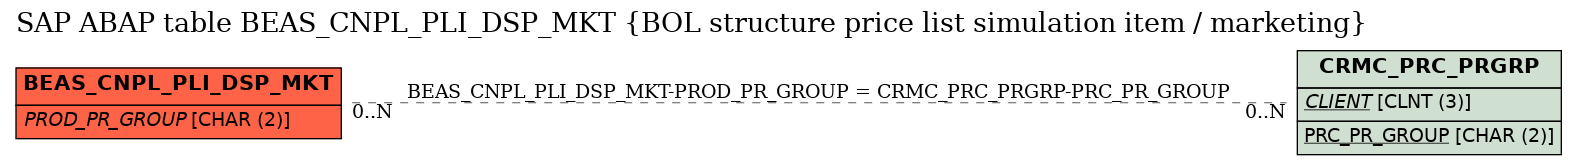 E-R Diagram for table BEAS_CNPL_PLI_DSP_MKT (BOL structure price list simulation item / marketing)